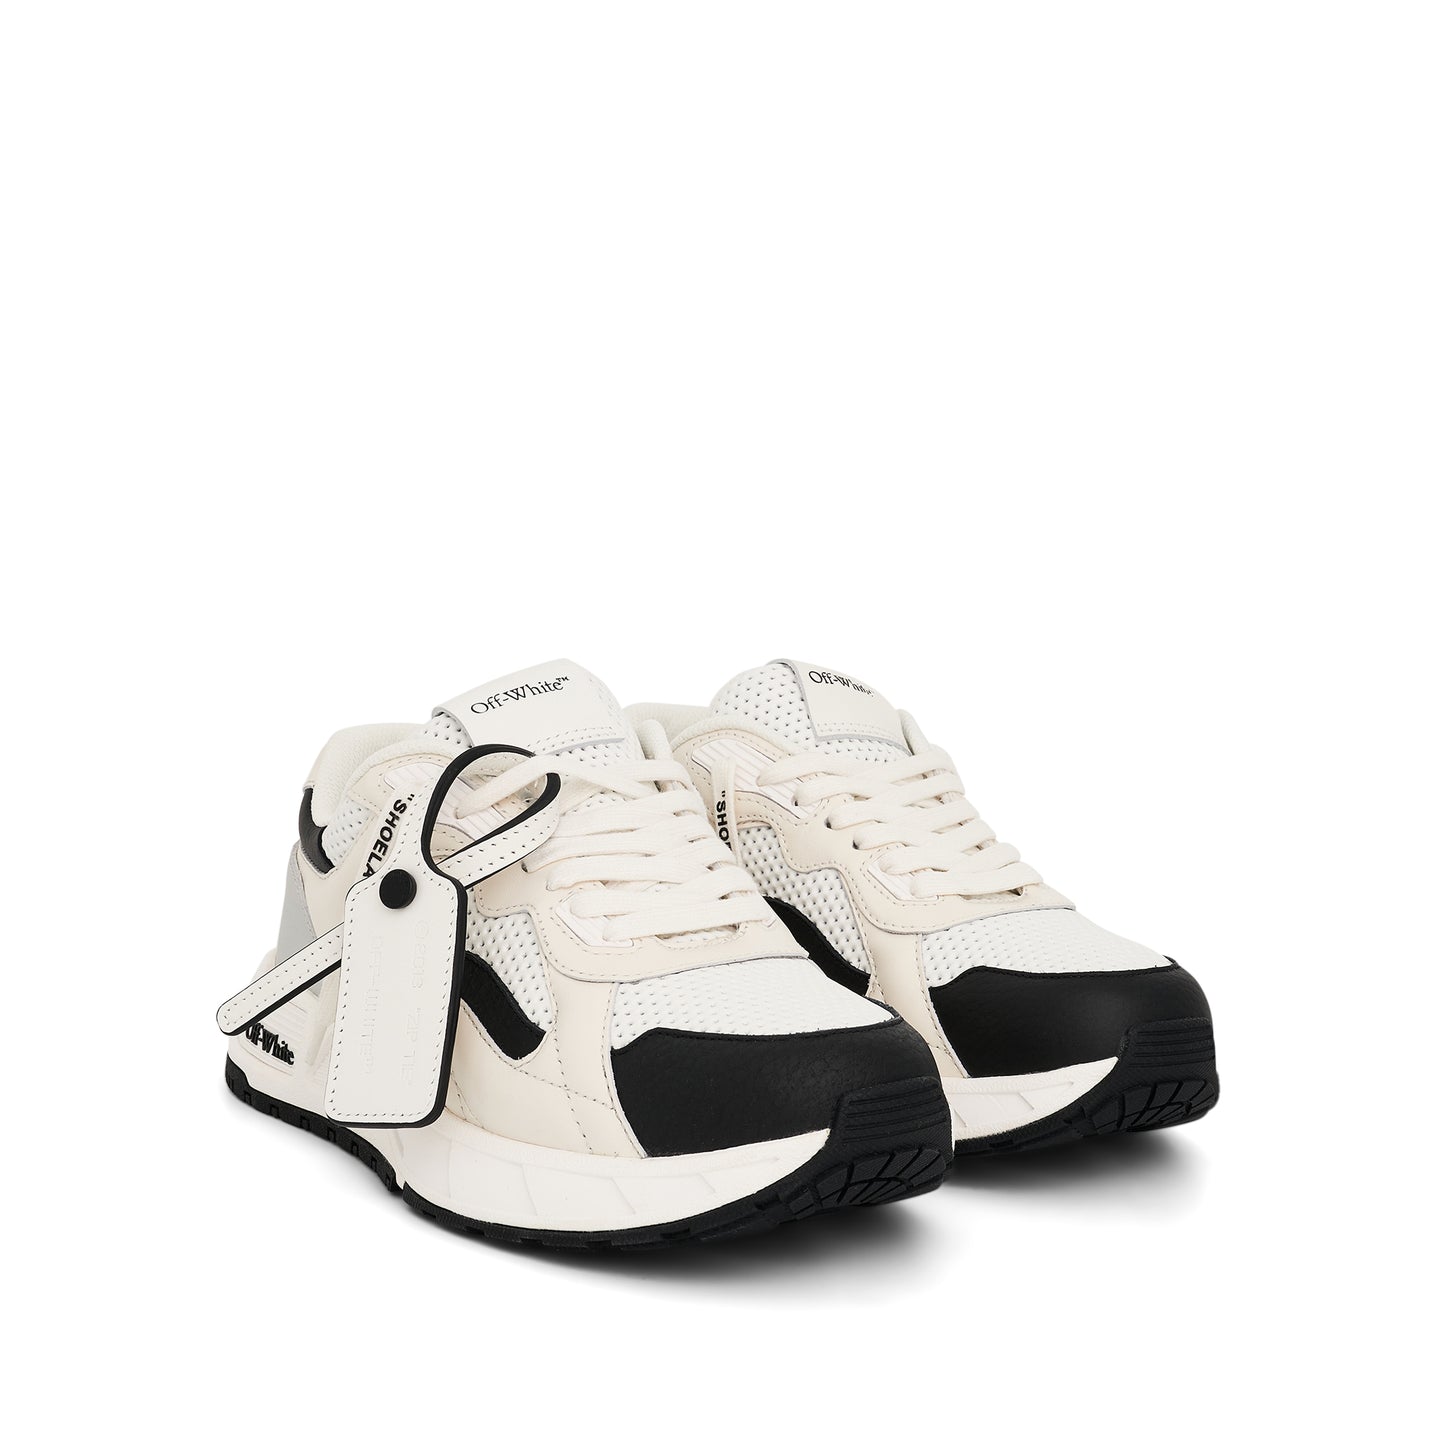 Kick off Sneaker In Colour White/Black